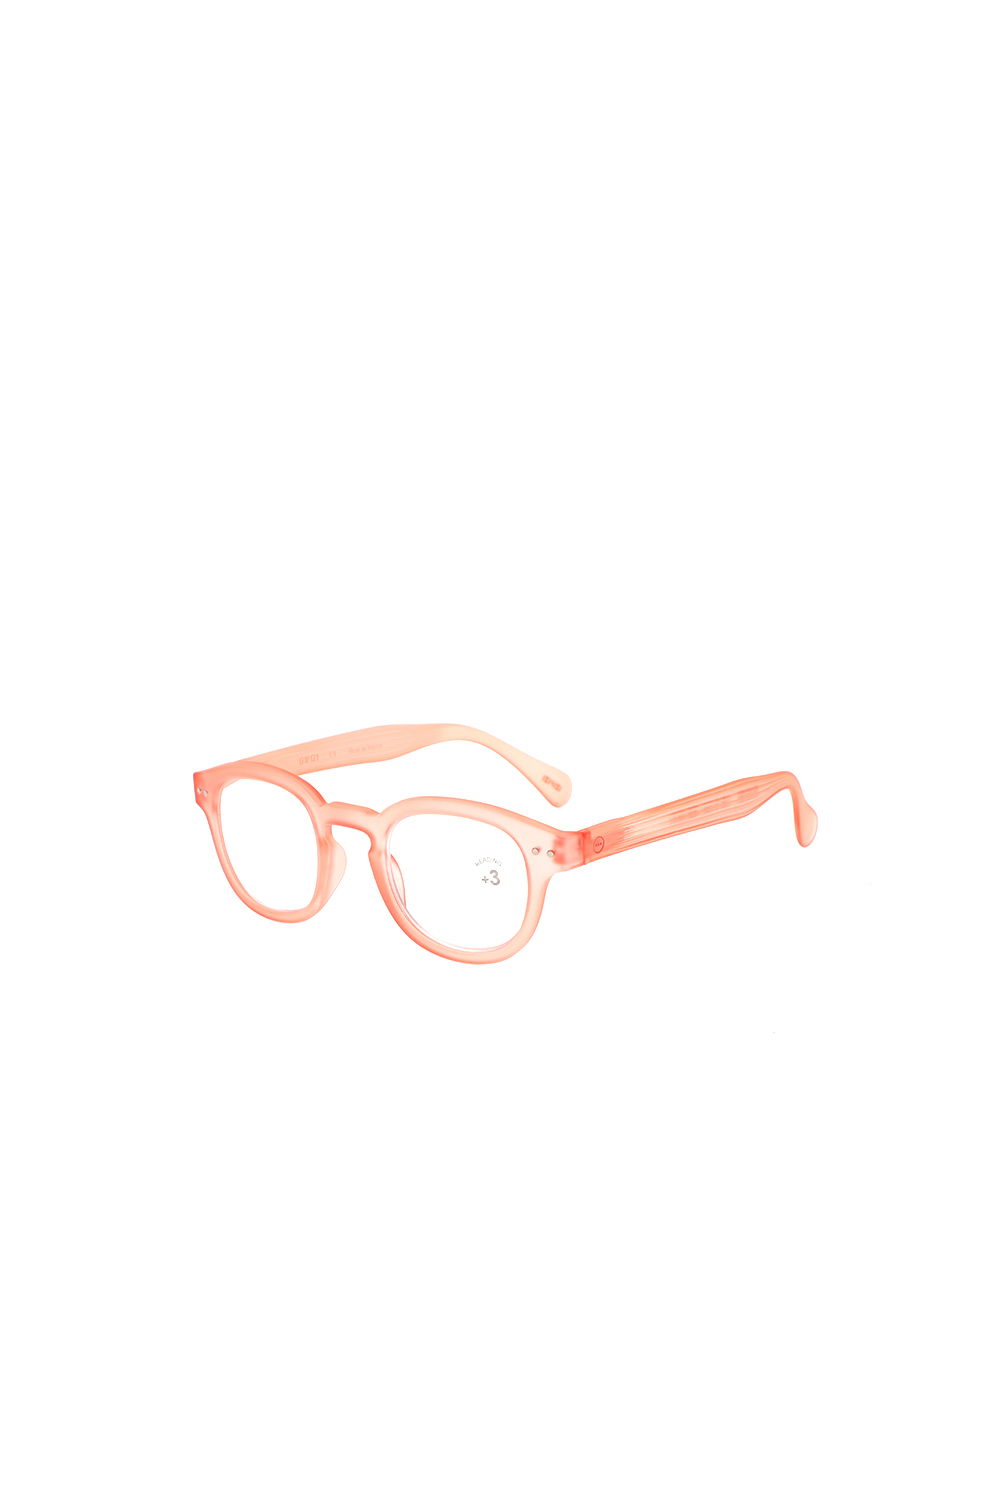 IZIPIZI – Unisex γυαλιά οράσεως IZIPIZI READING BLOOM διαφανή ροζ 1788040.0-0100